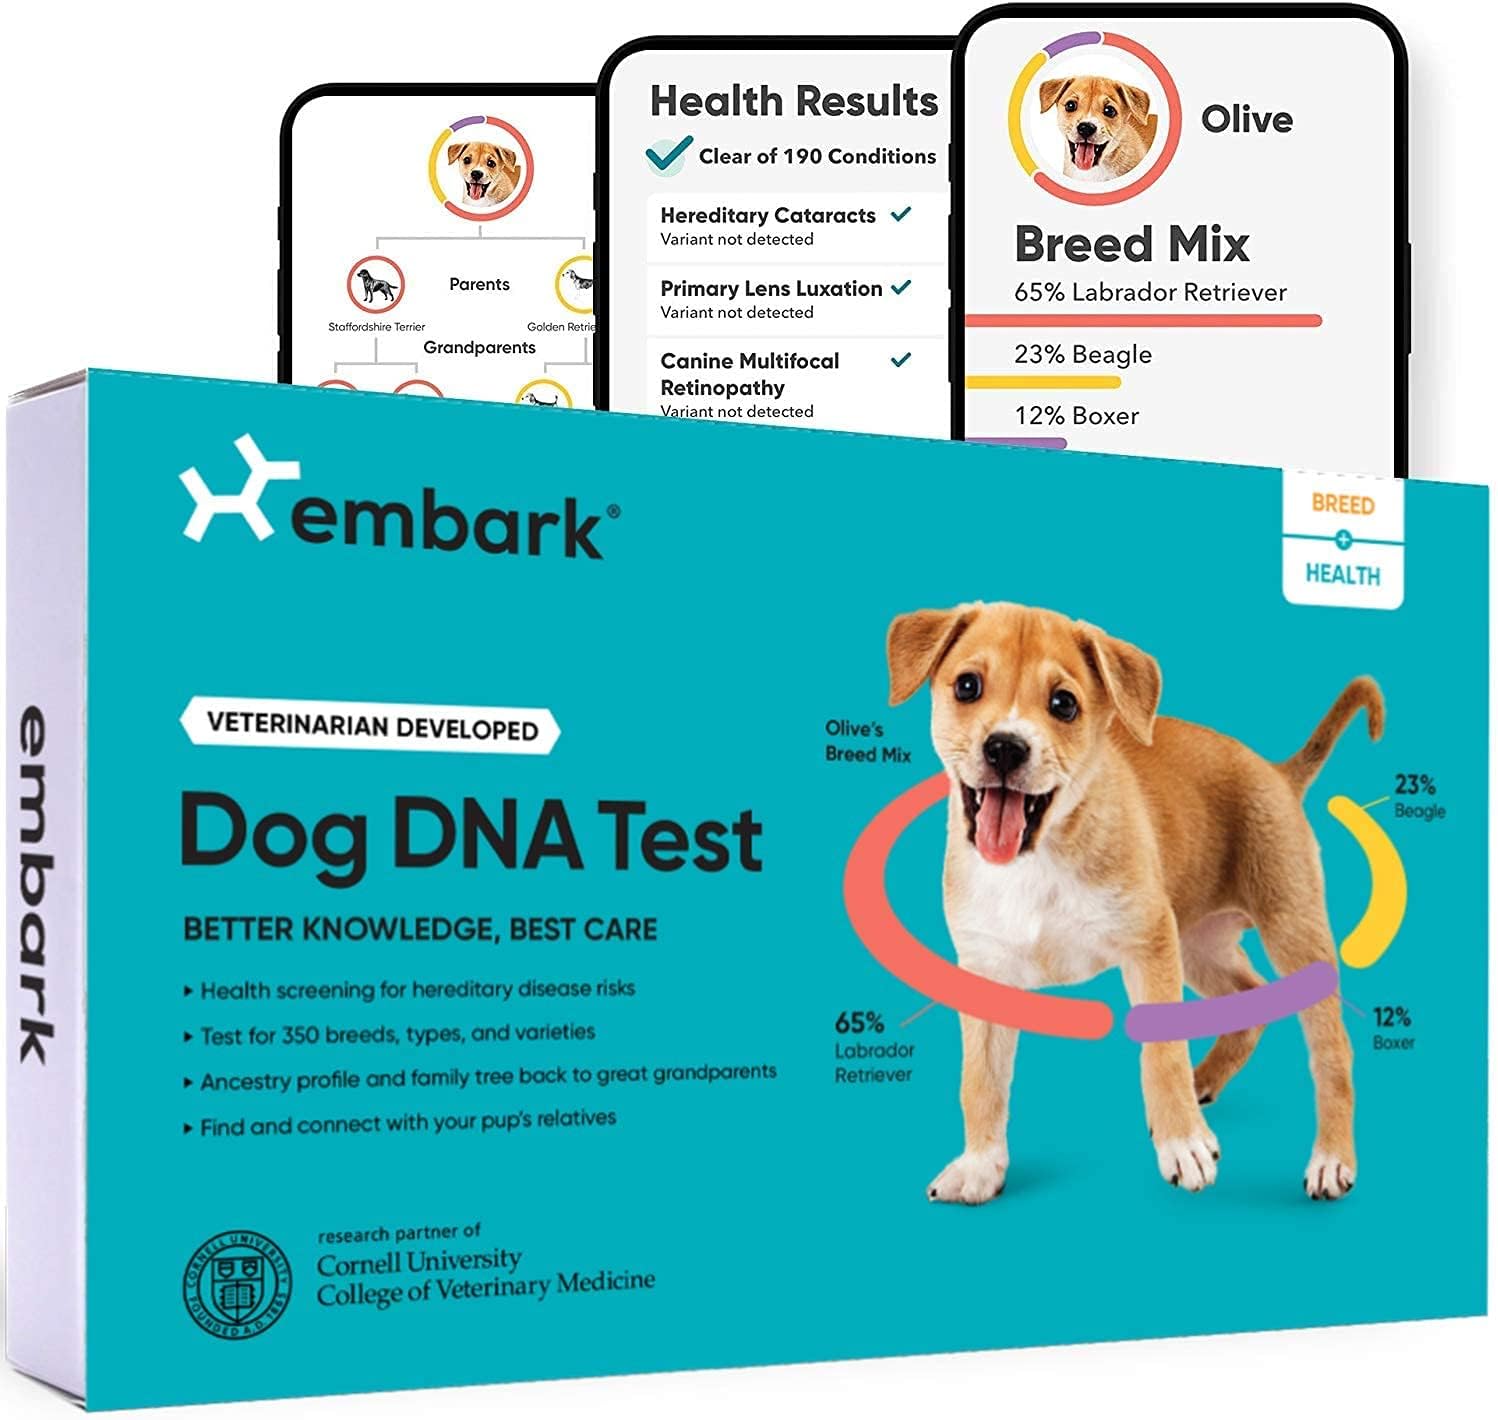 Embark Breed & Health Kit